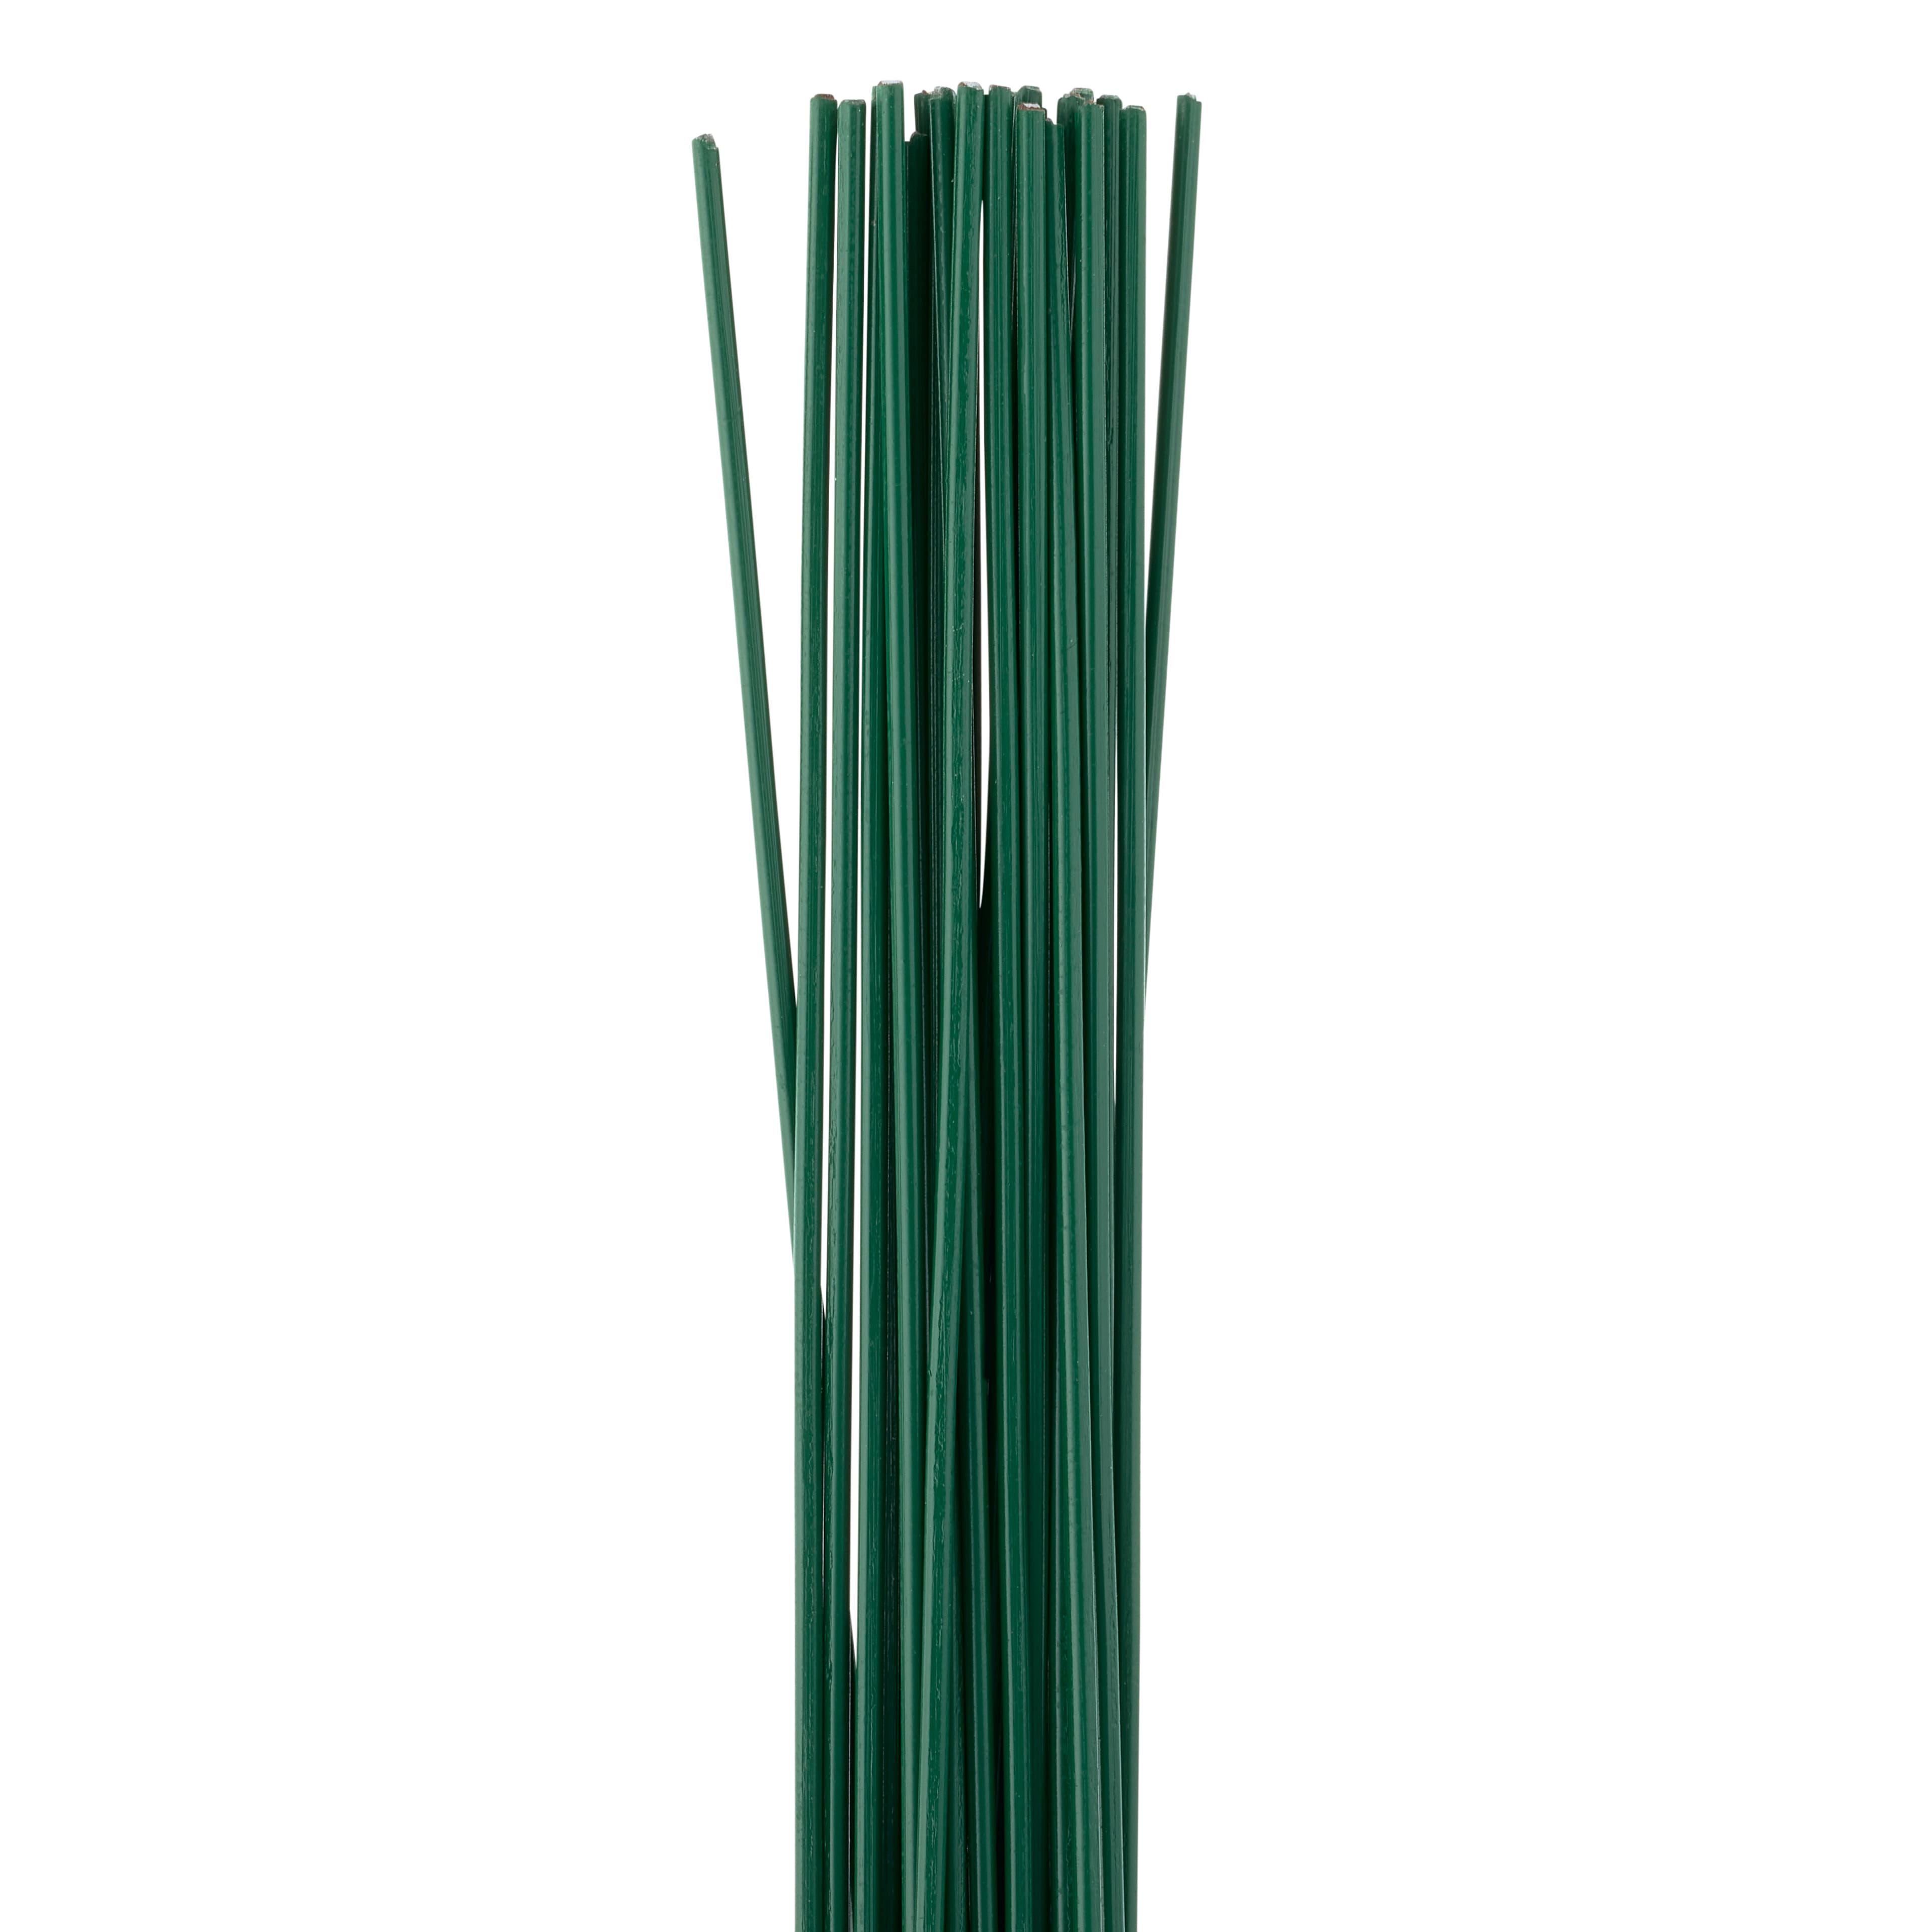 Floral stem wire, L: 30 cm, Dia. 0,6 mm, green, 20 pc/ 1 pack [HOB-610350]  - Packlinq